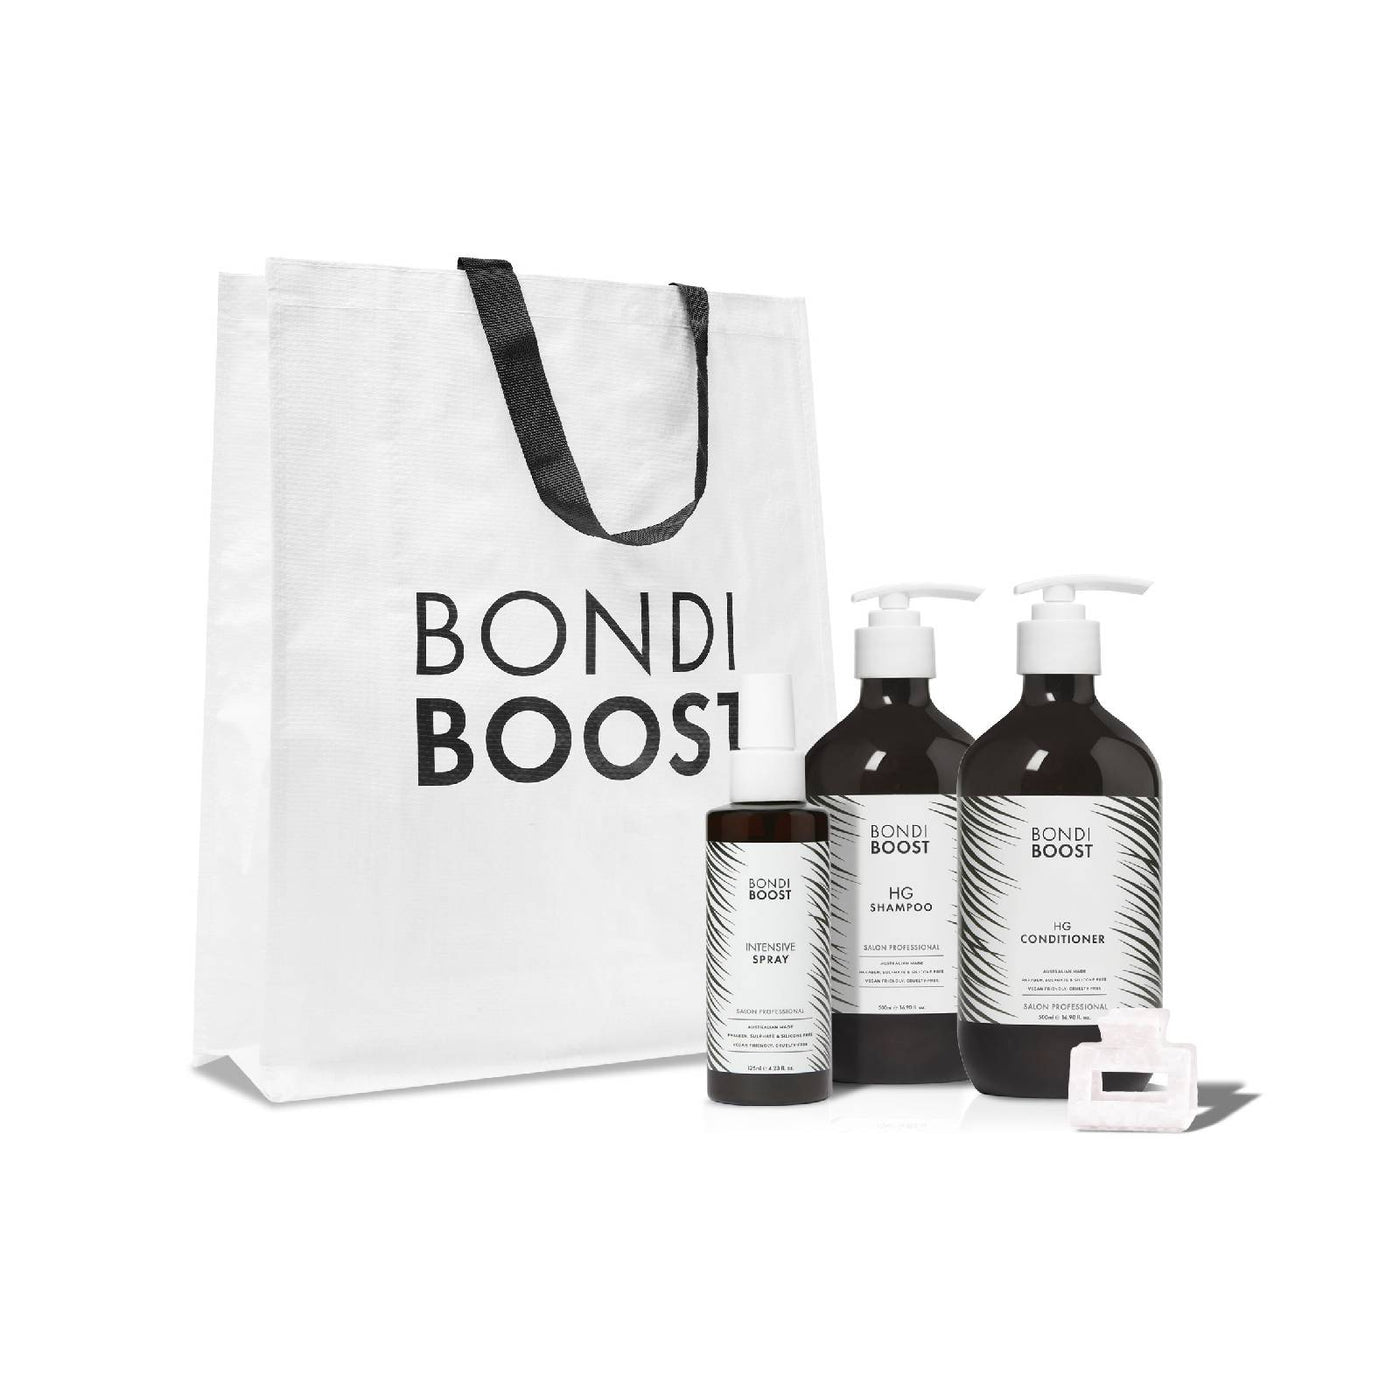 BondiBoost Holy Grail Haircare Kit